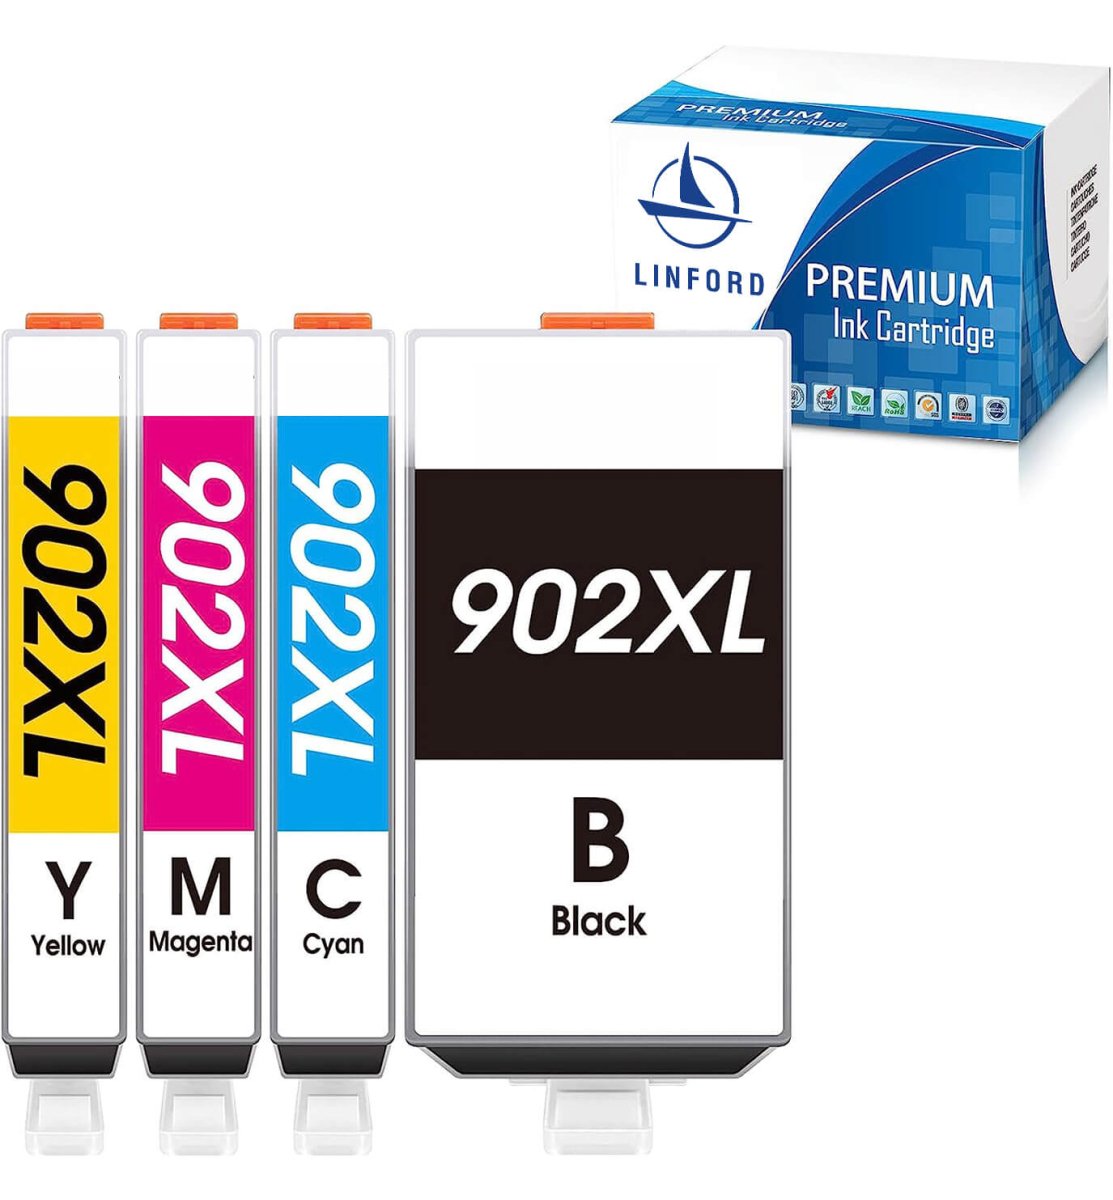 HP 902XL Ink 4 Pack Cartridges Compatible High Yield - Black, Cyan, Magenta, Yellow - Linford Office:Printer Ink & Toner Cartridge